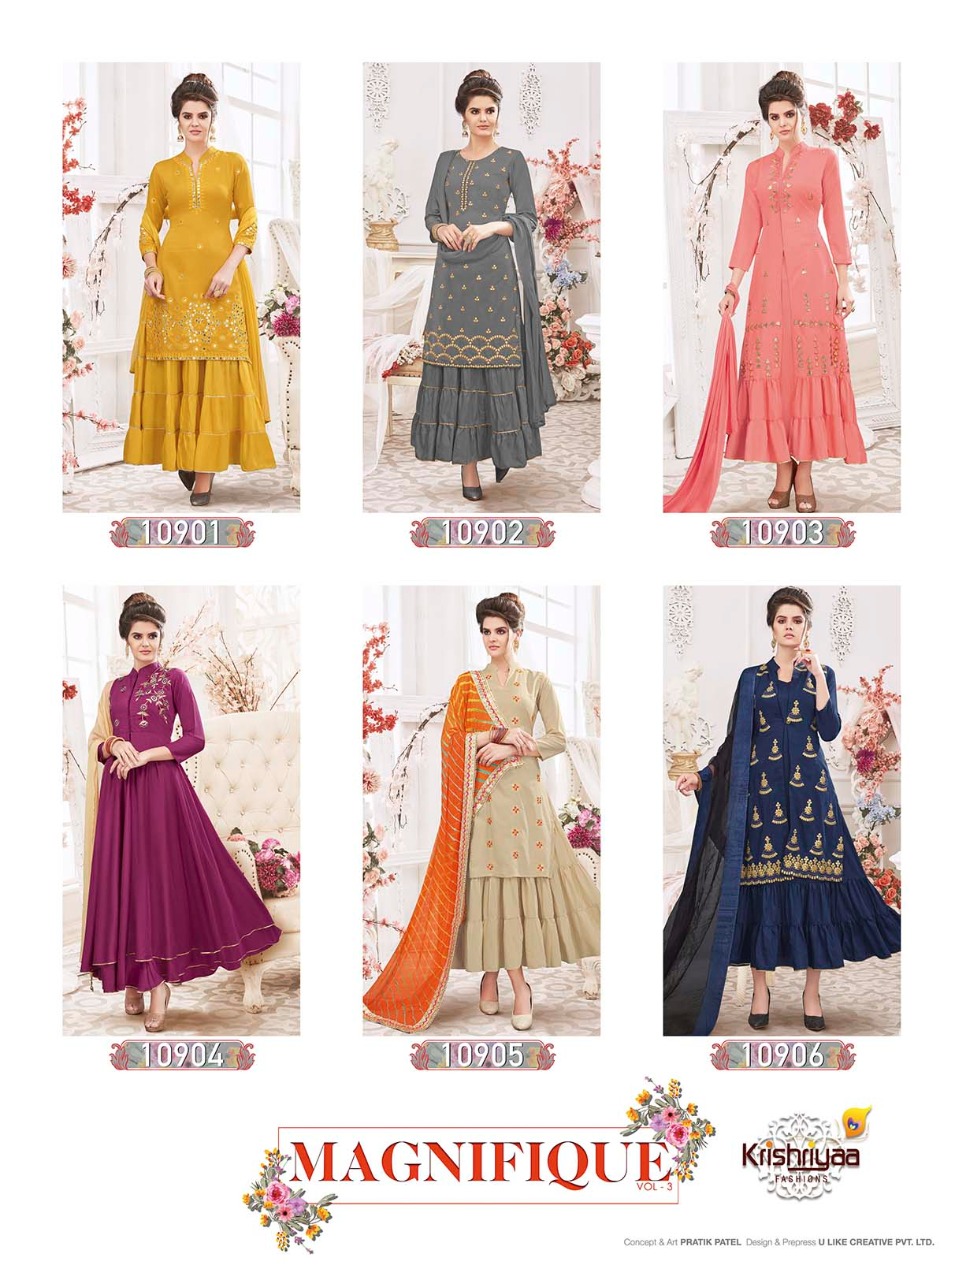 Krishriyaa presents magnifique vol 3 special festive season flaried gowns collection